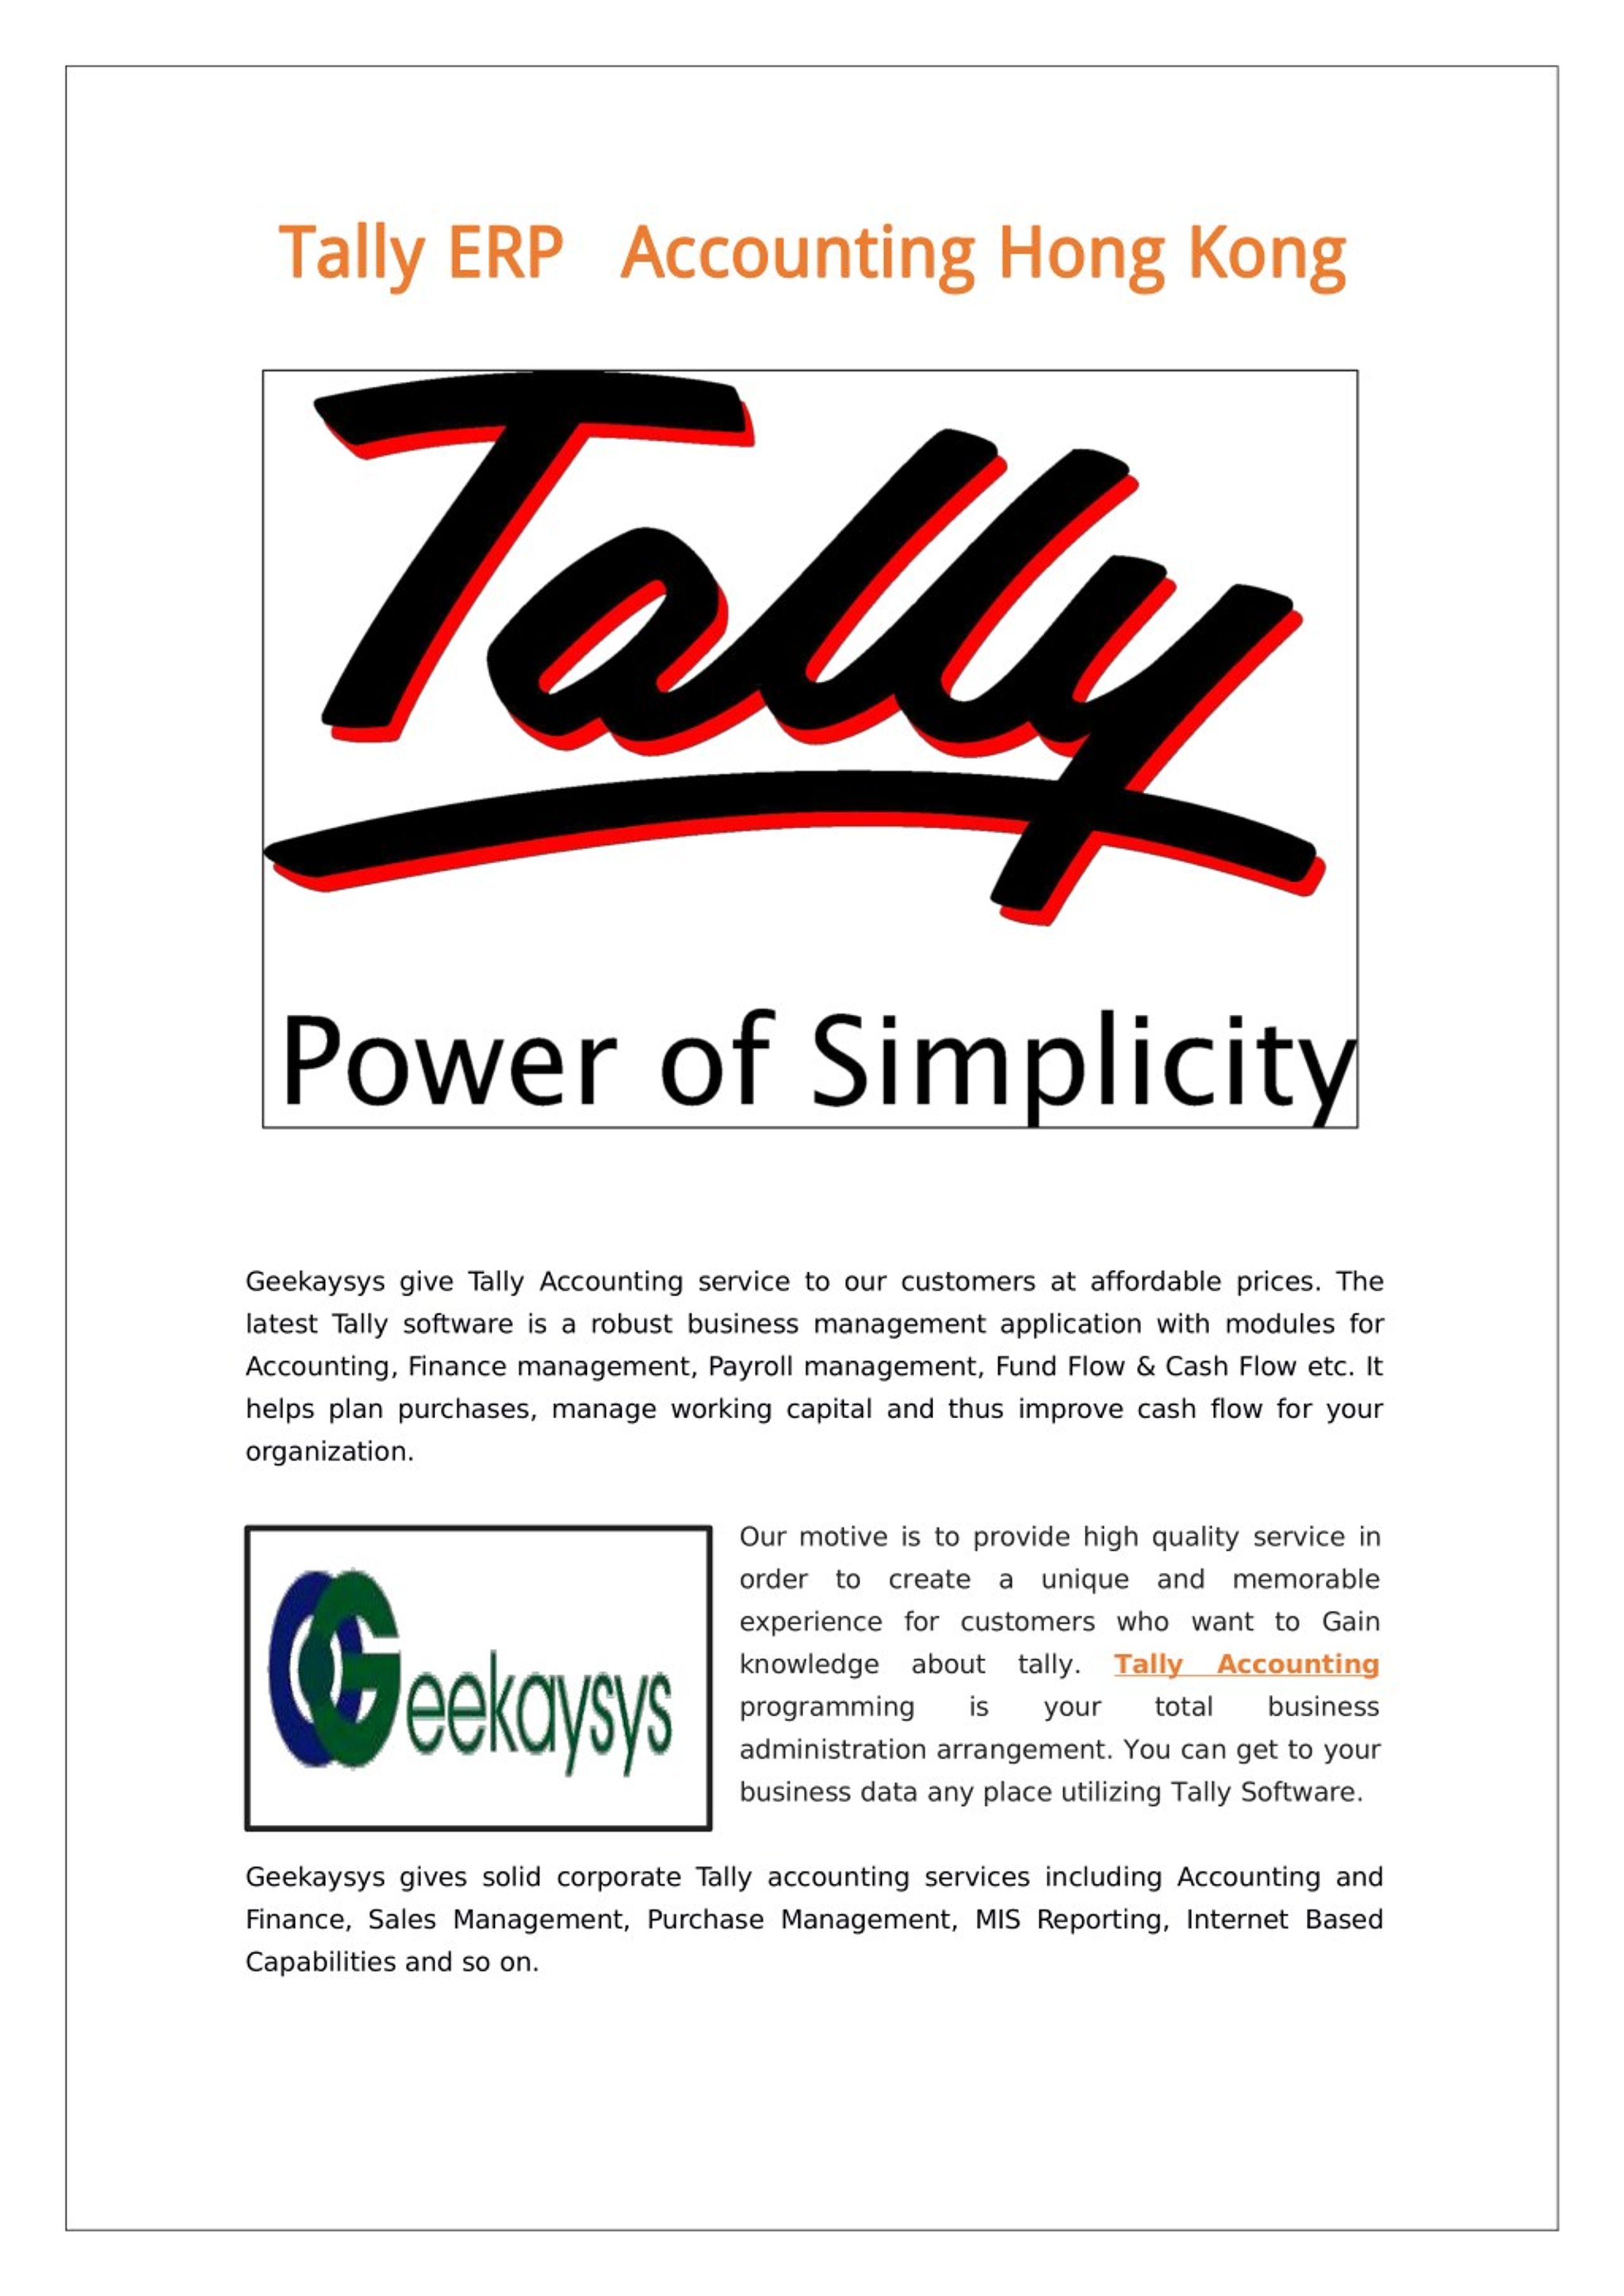 tally presentation pdf free download